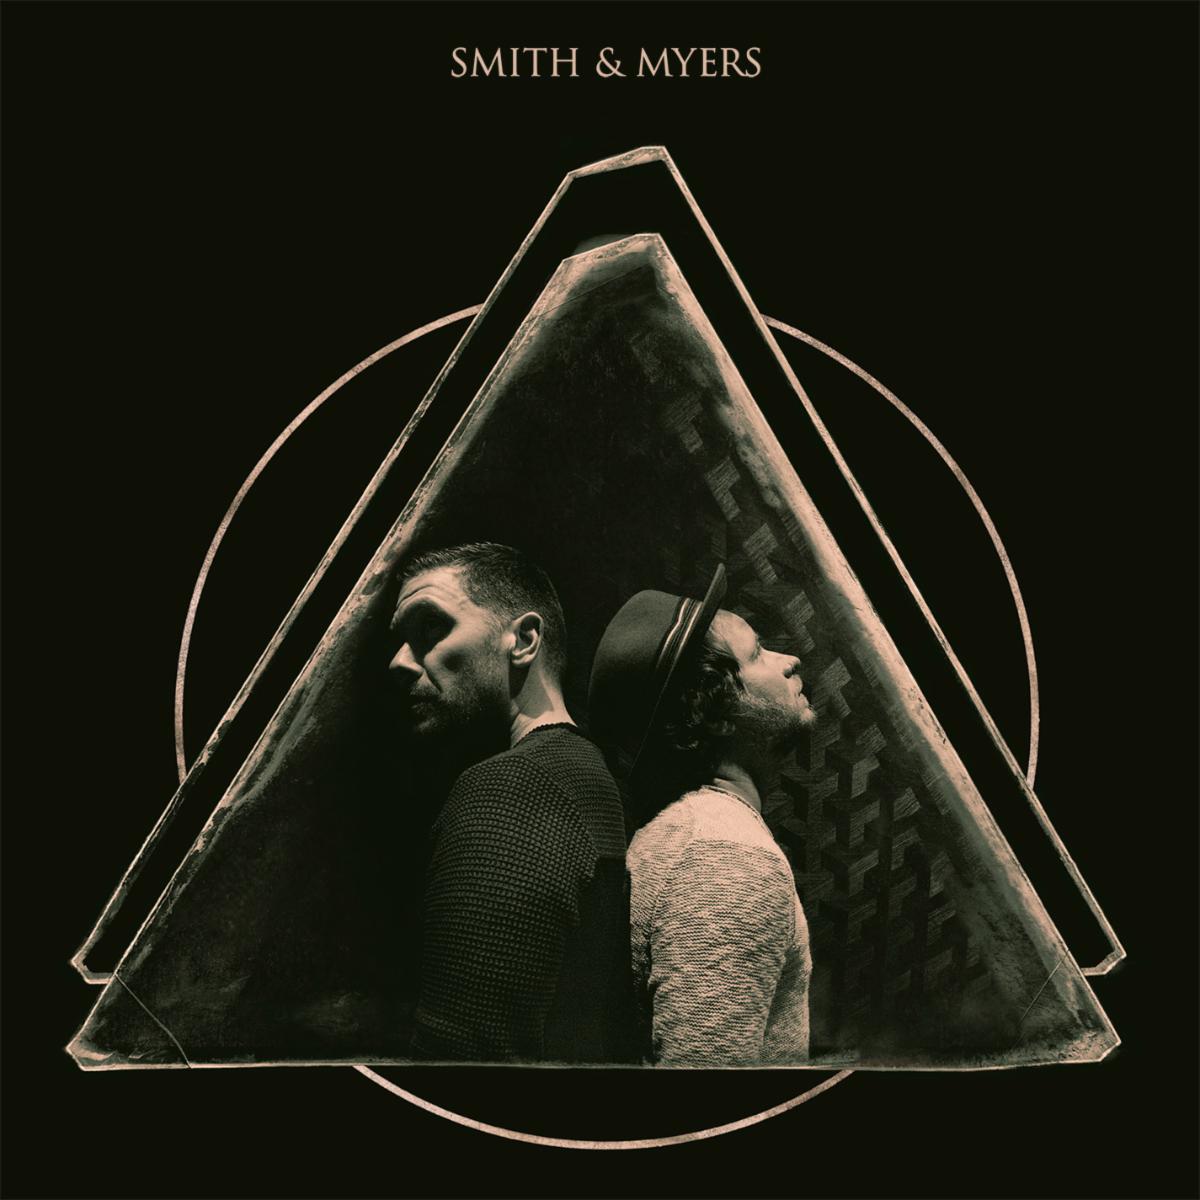 Brent Smith & Zach Myers (Smith & Myers) Release New Album Smith & Myers Volume 1